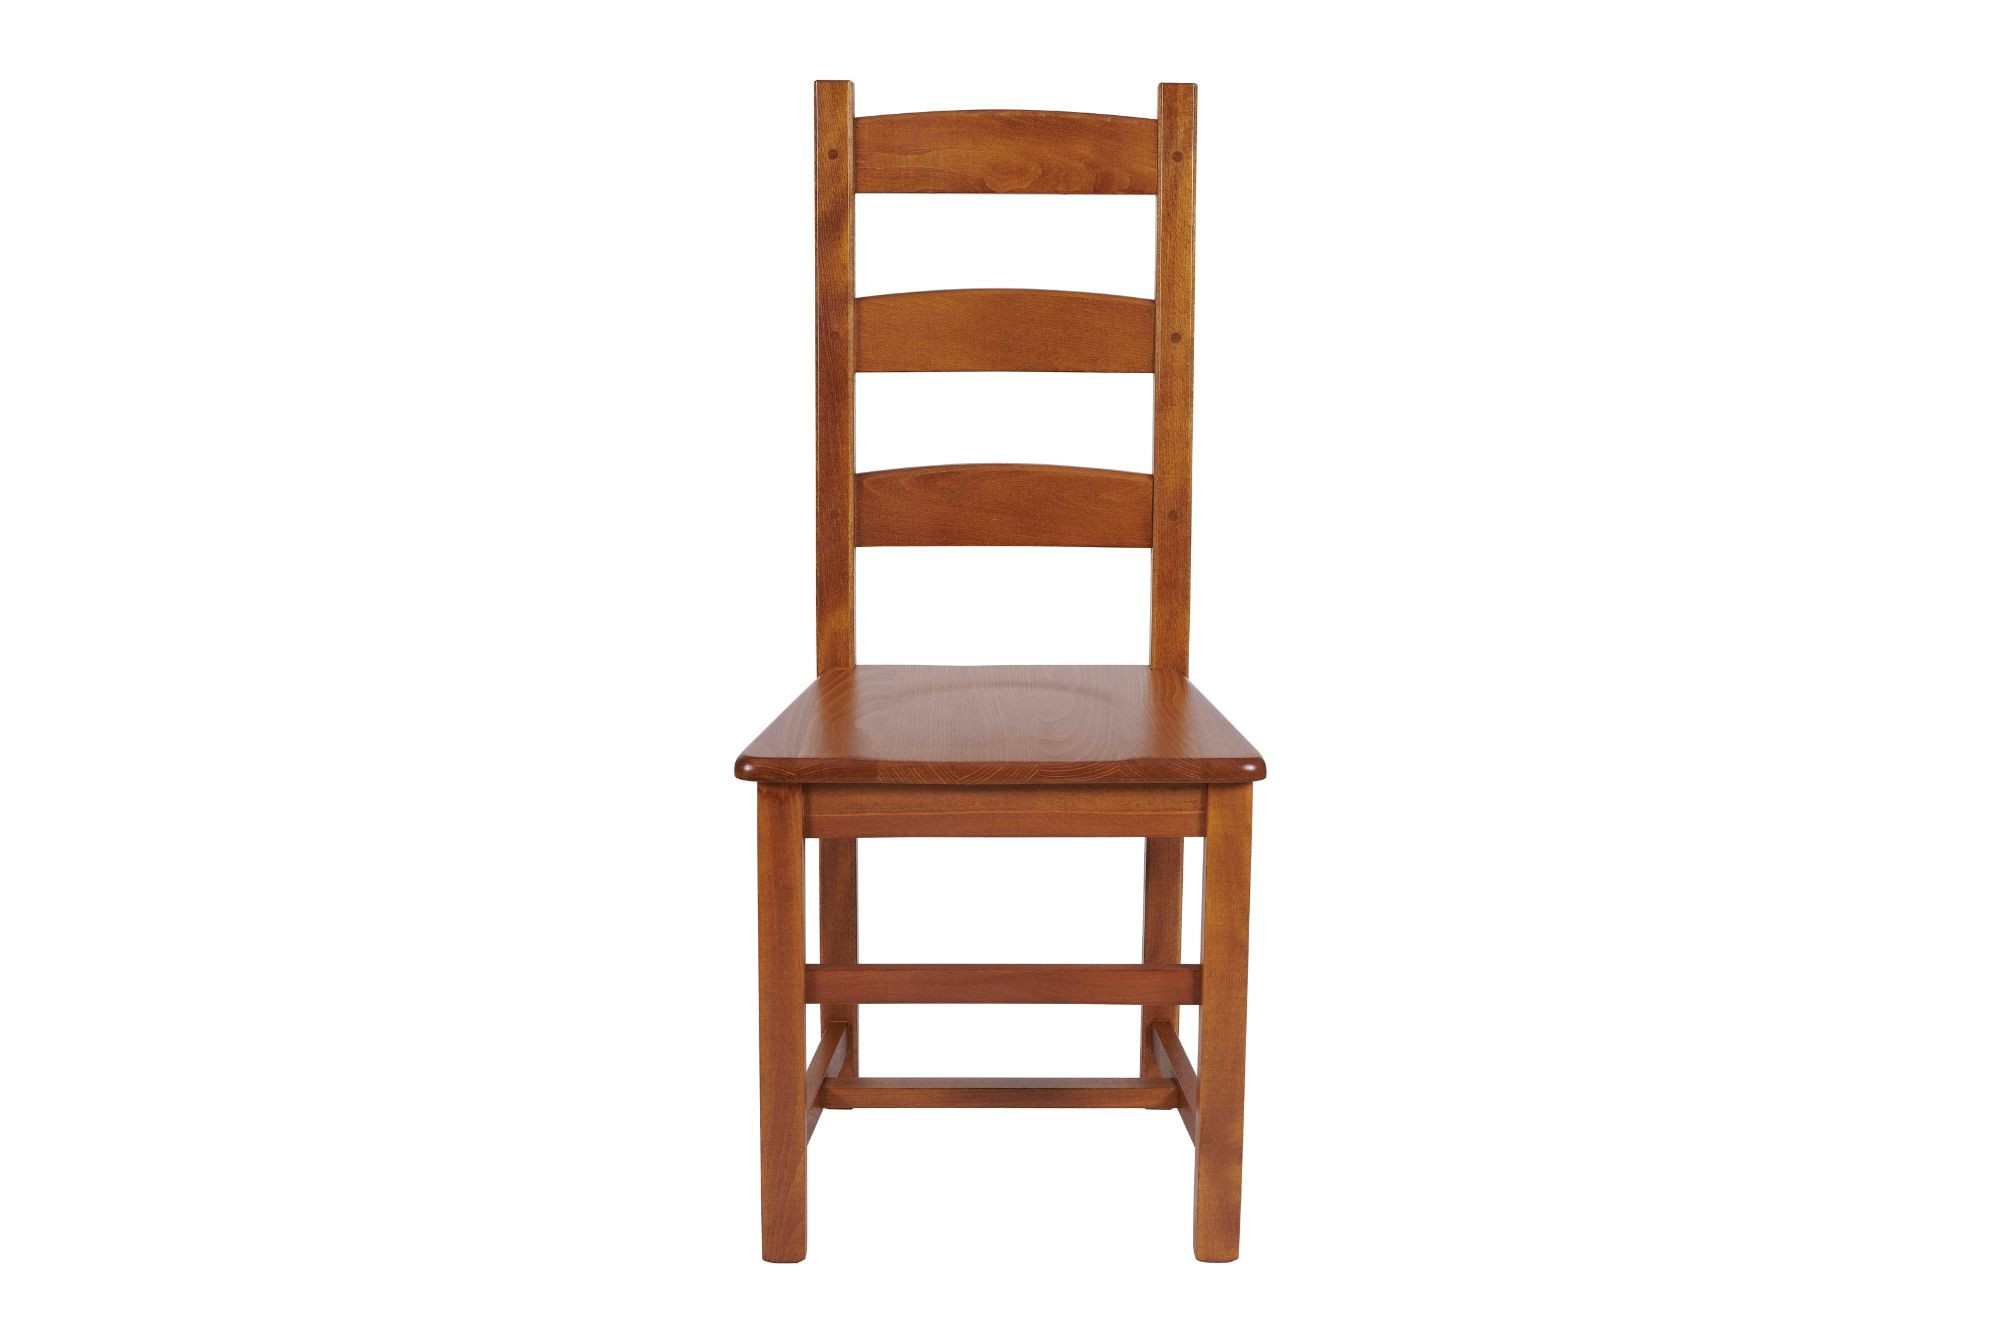 Table en bois Filigrame avec 6 chaises Nancy - Hellin